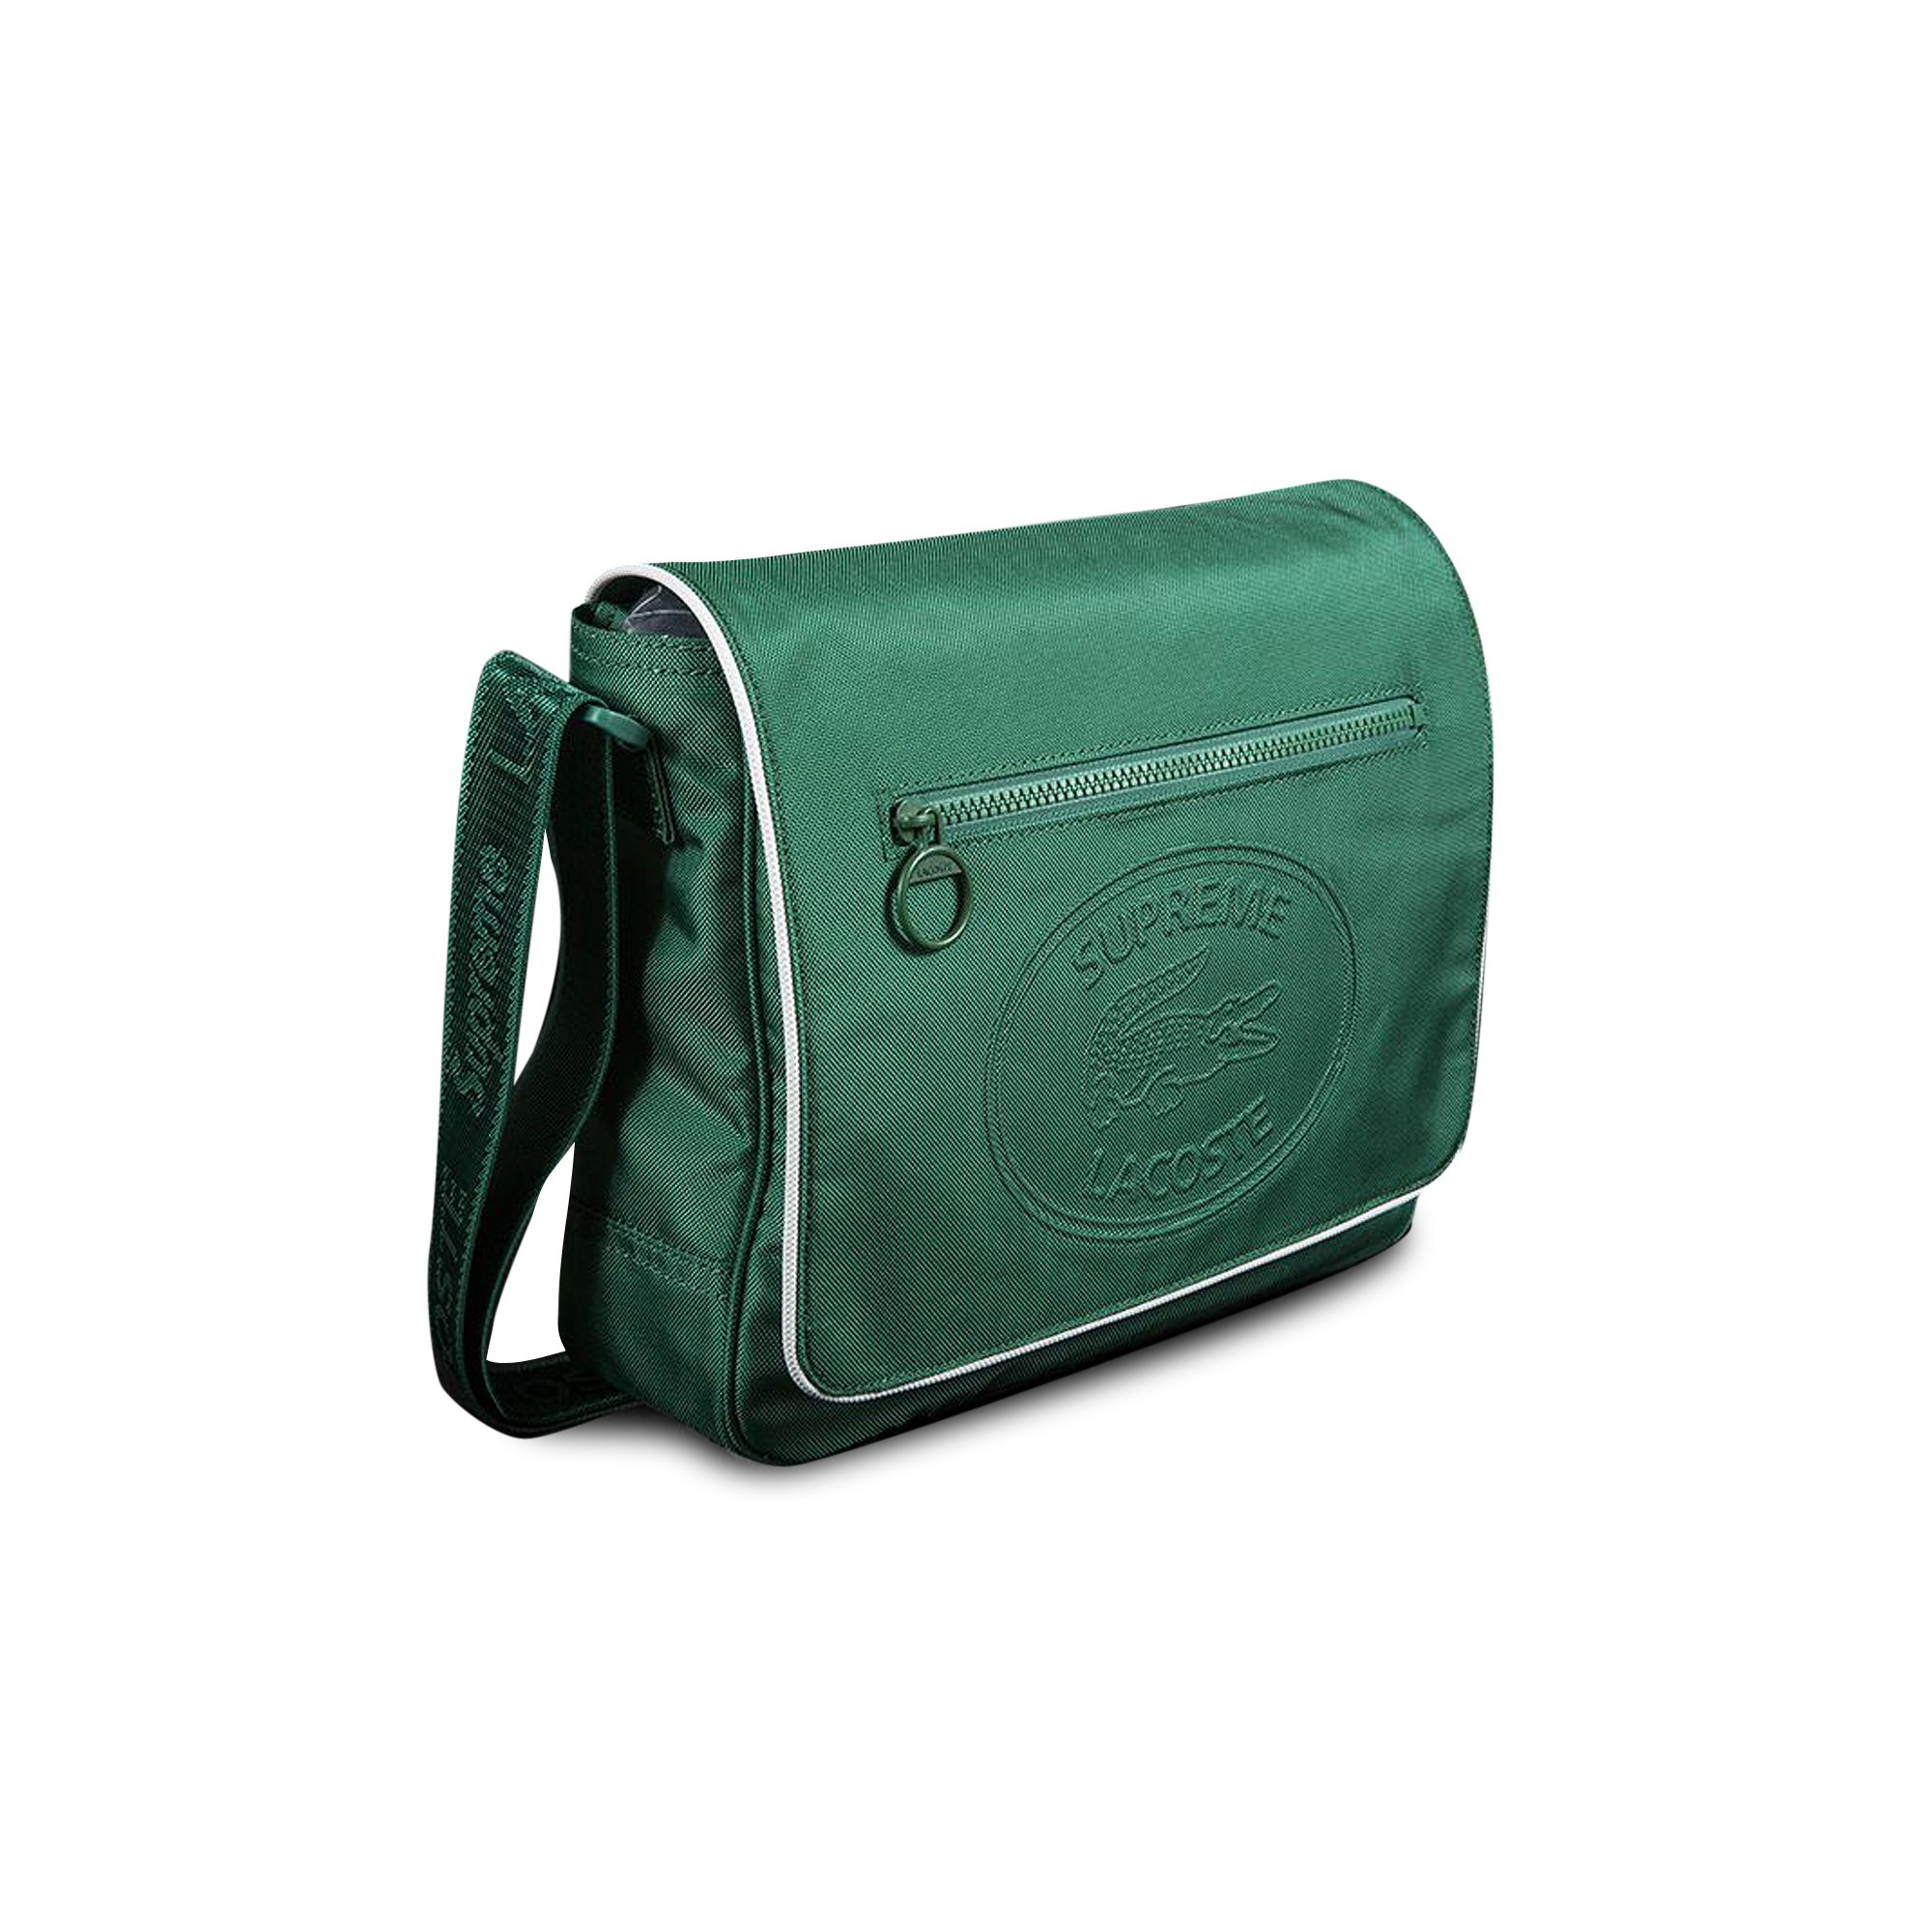 Supreme x Lacoste Small Messenger Bag 'Green' | GOAT